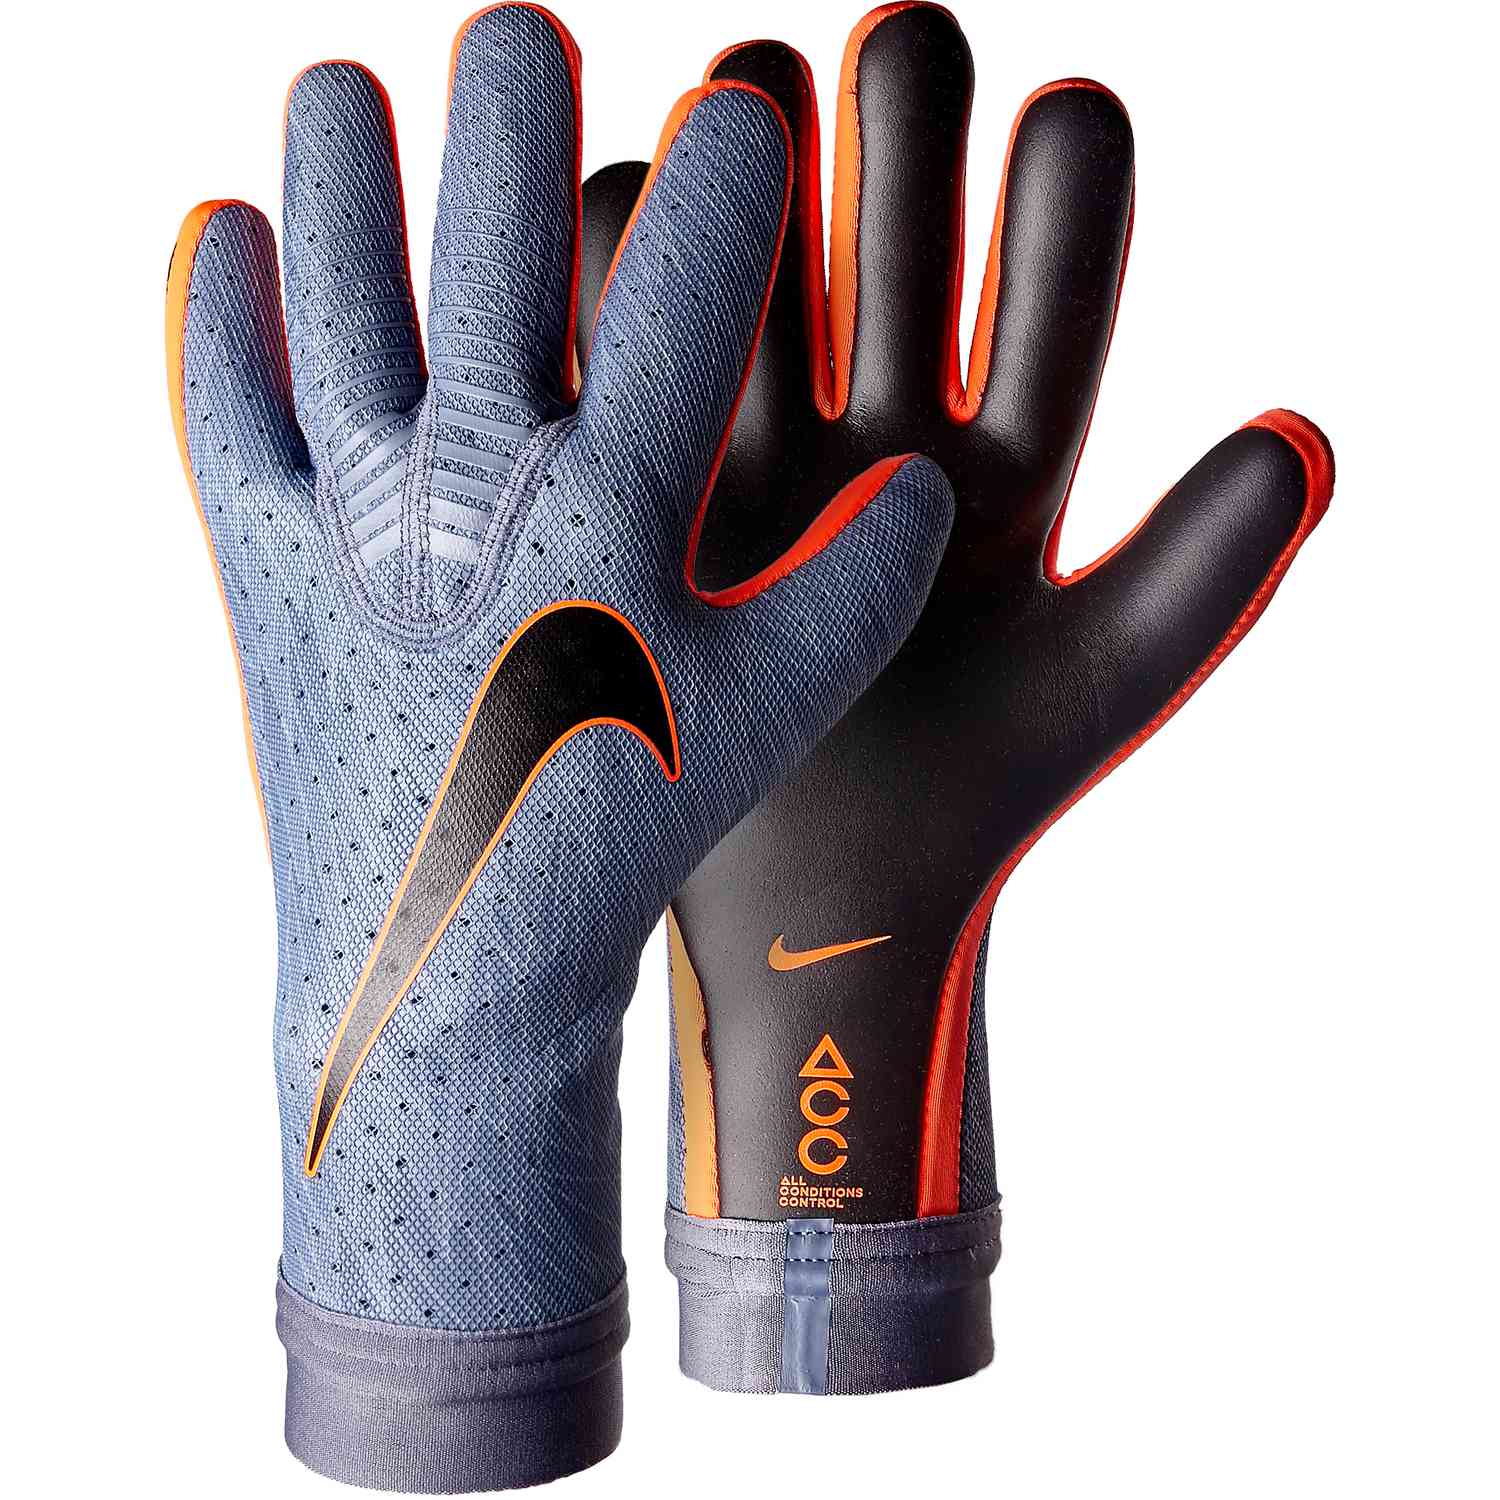 mercurial touch elite goalkeeper gloves